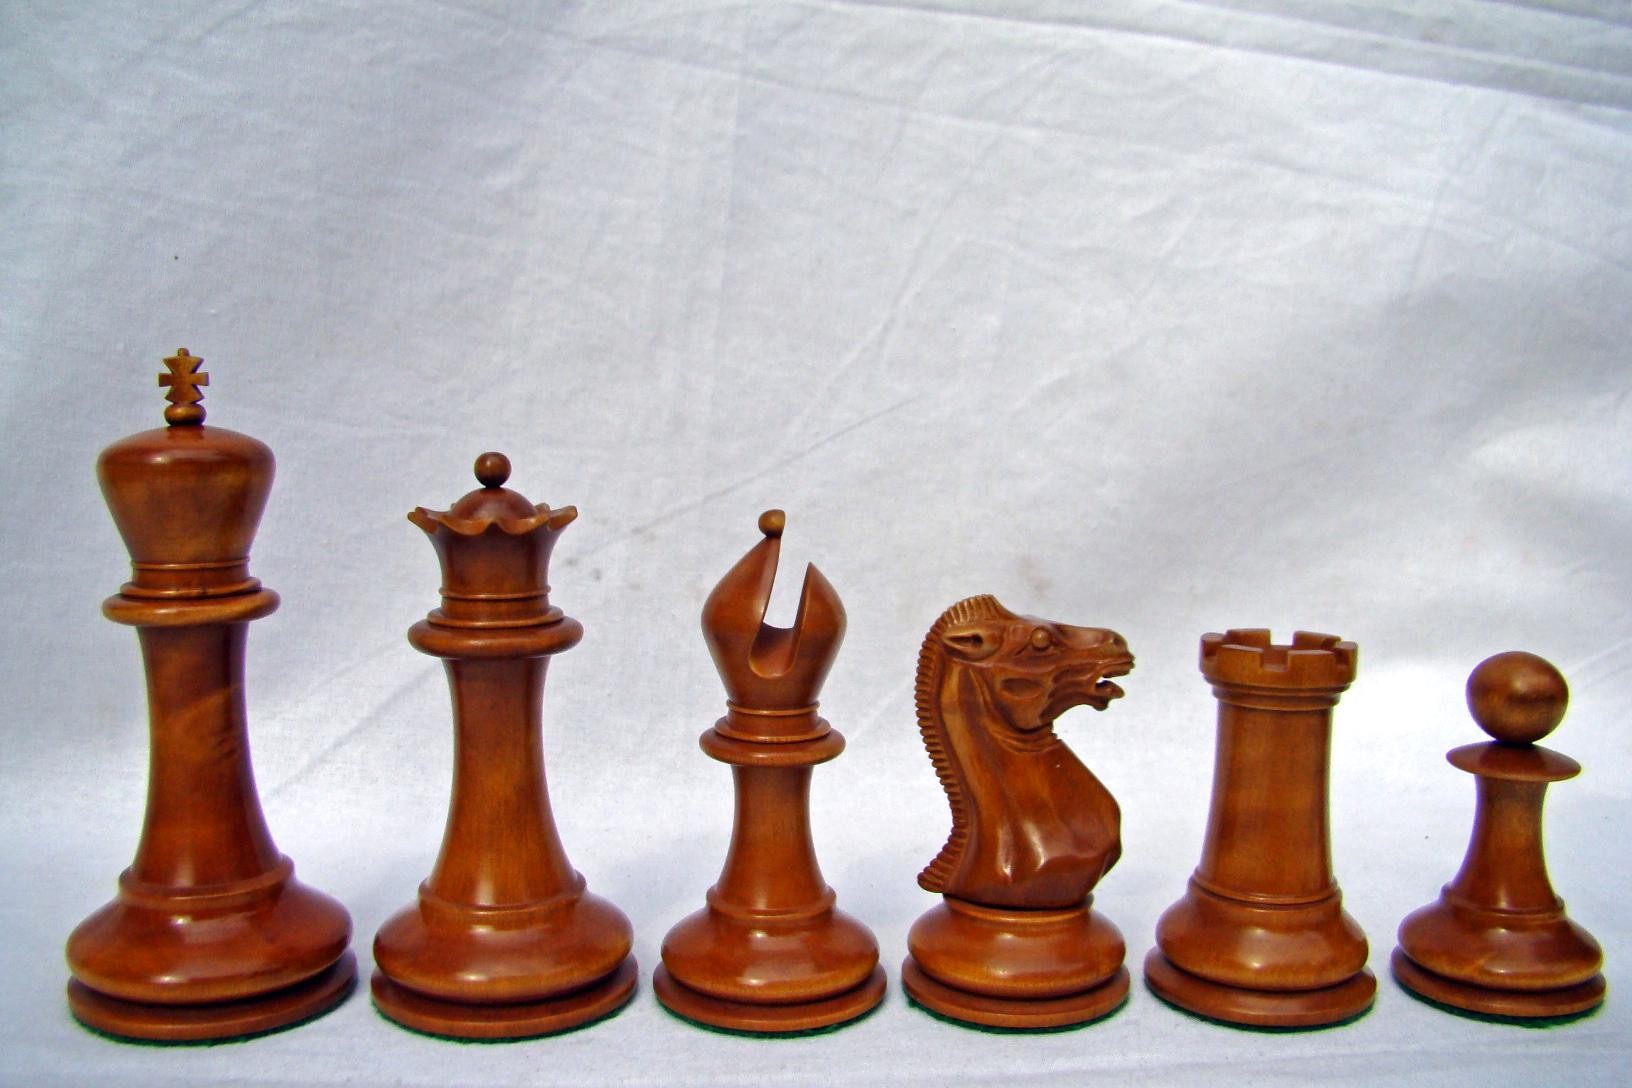 Original 1849 staunton chess set